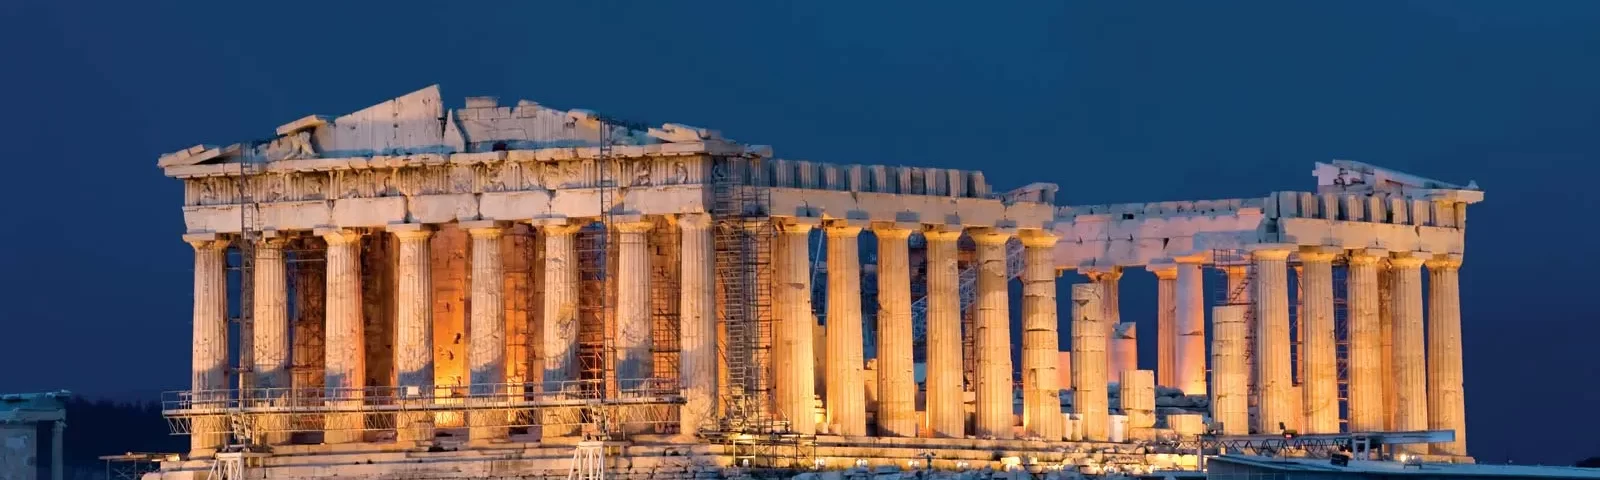 Night view of the Parthenon - Encyclopedia Britannica